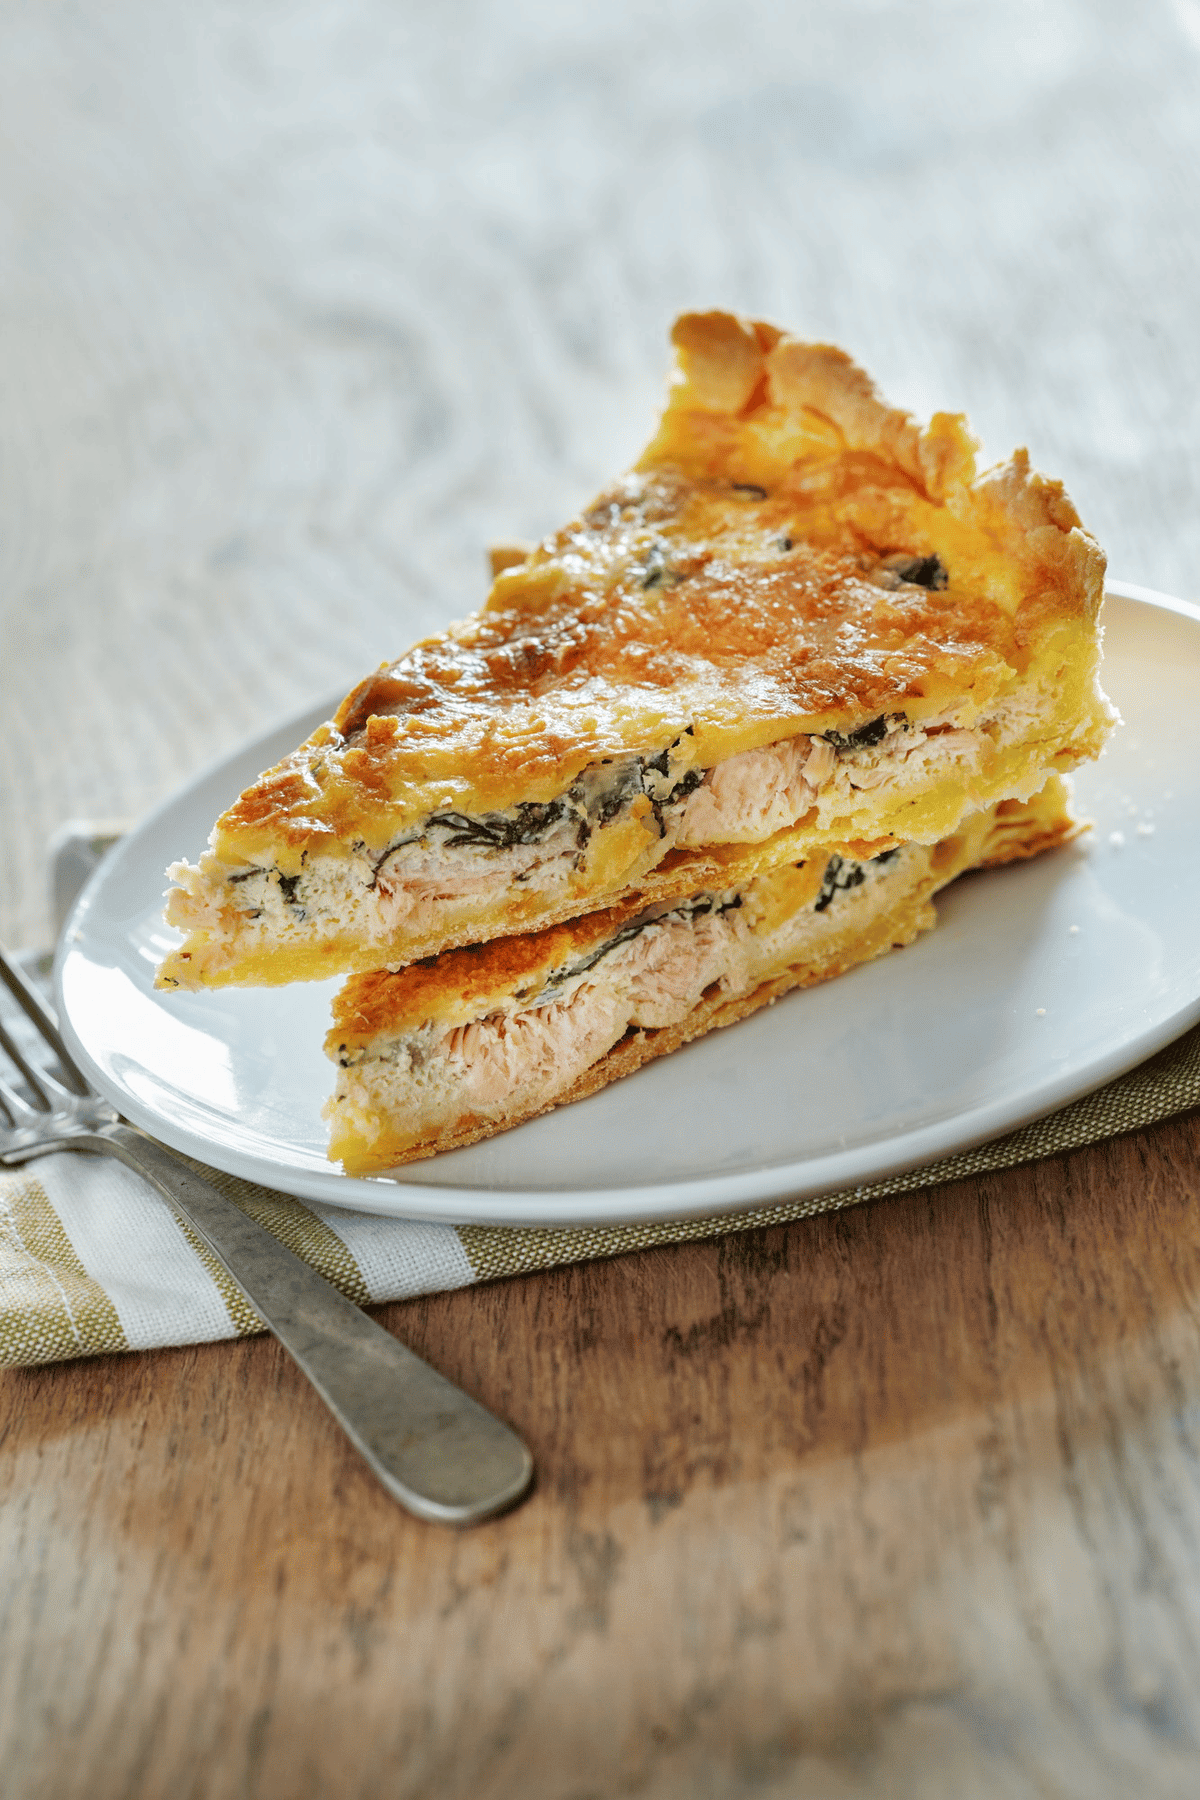 Torta de sardinha: Deliciosa, confira como fazer